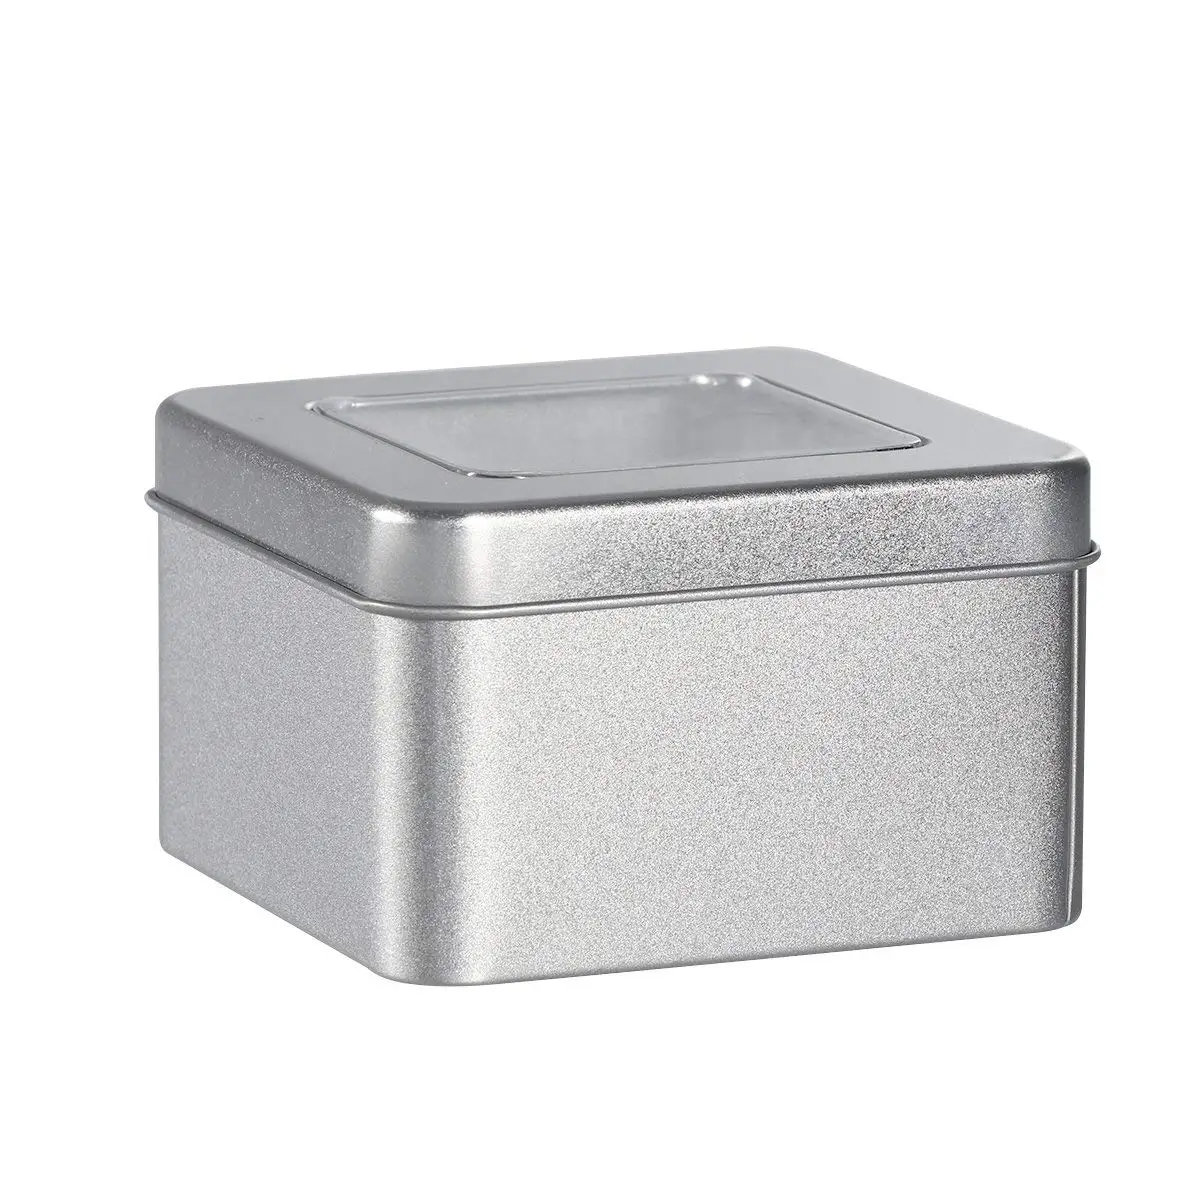 square metal tins wholesale